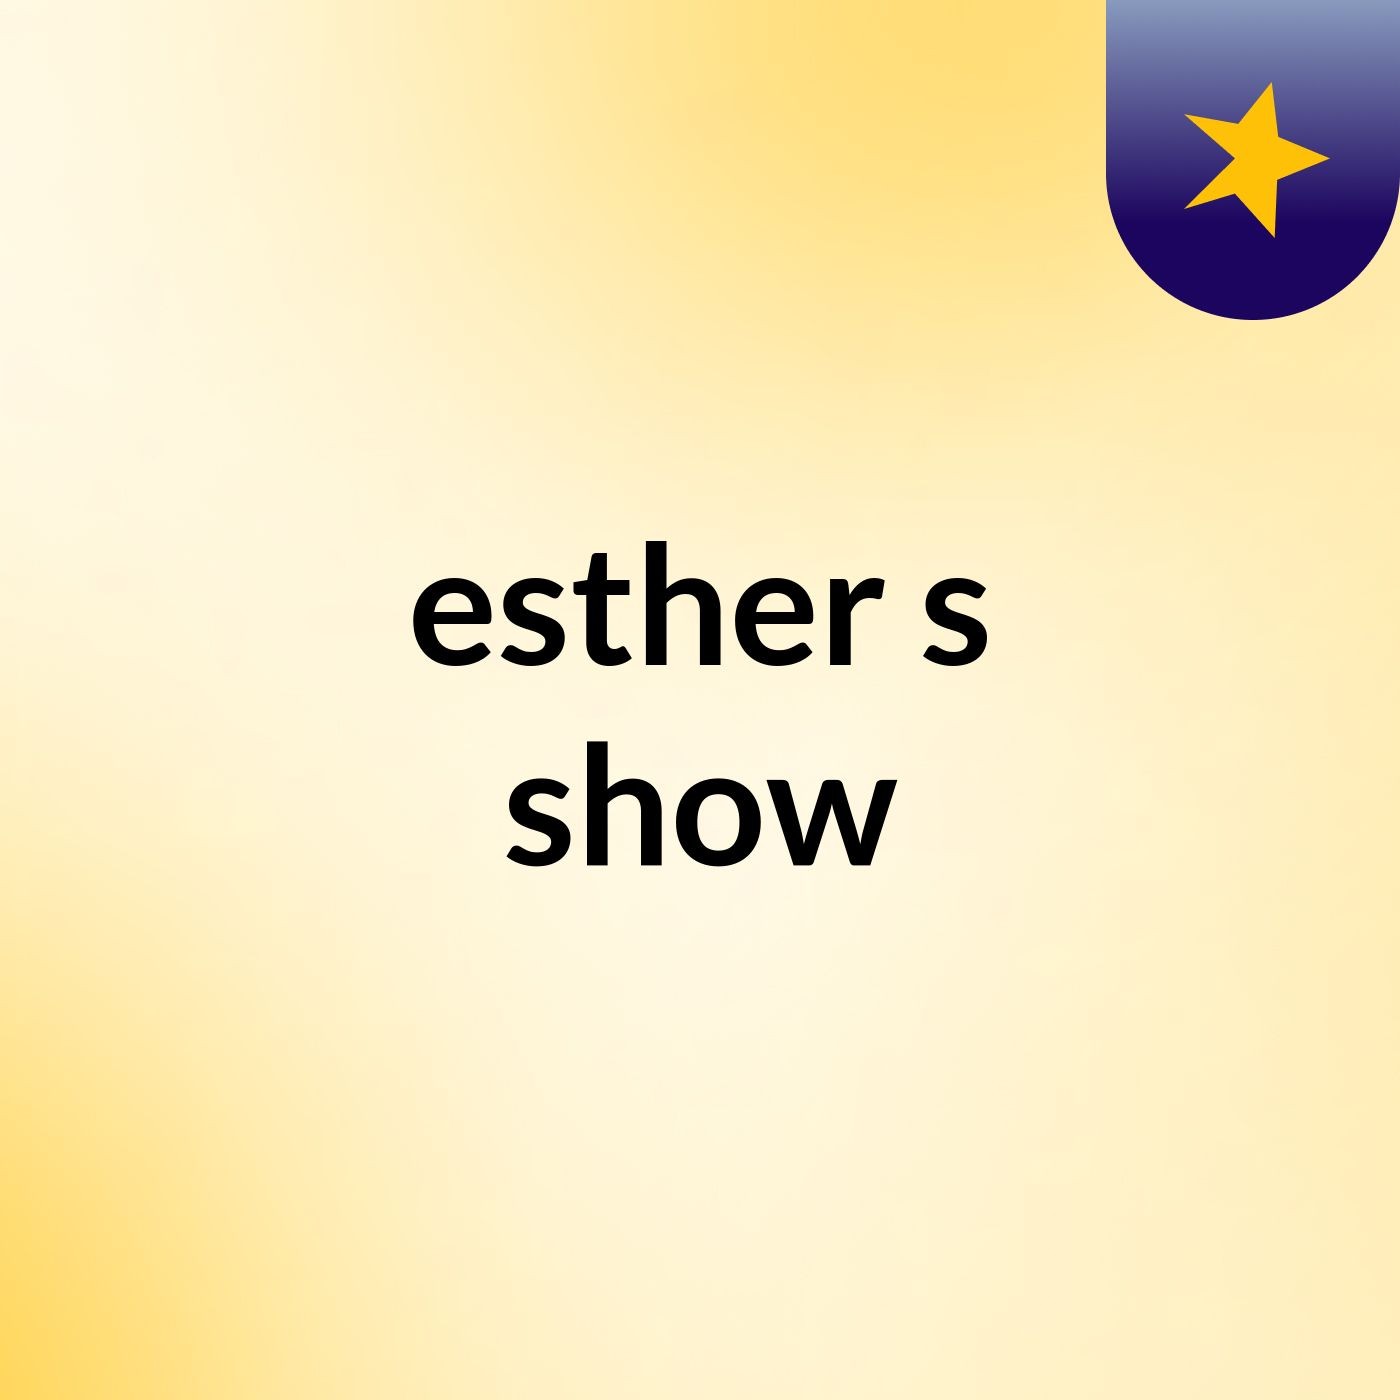 esther's show